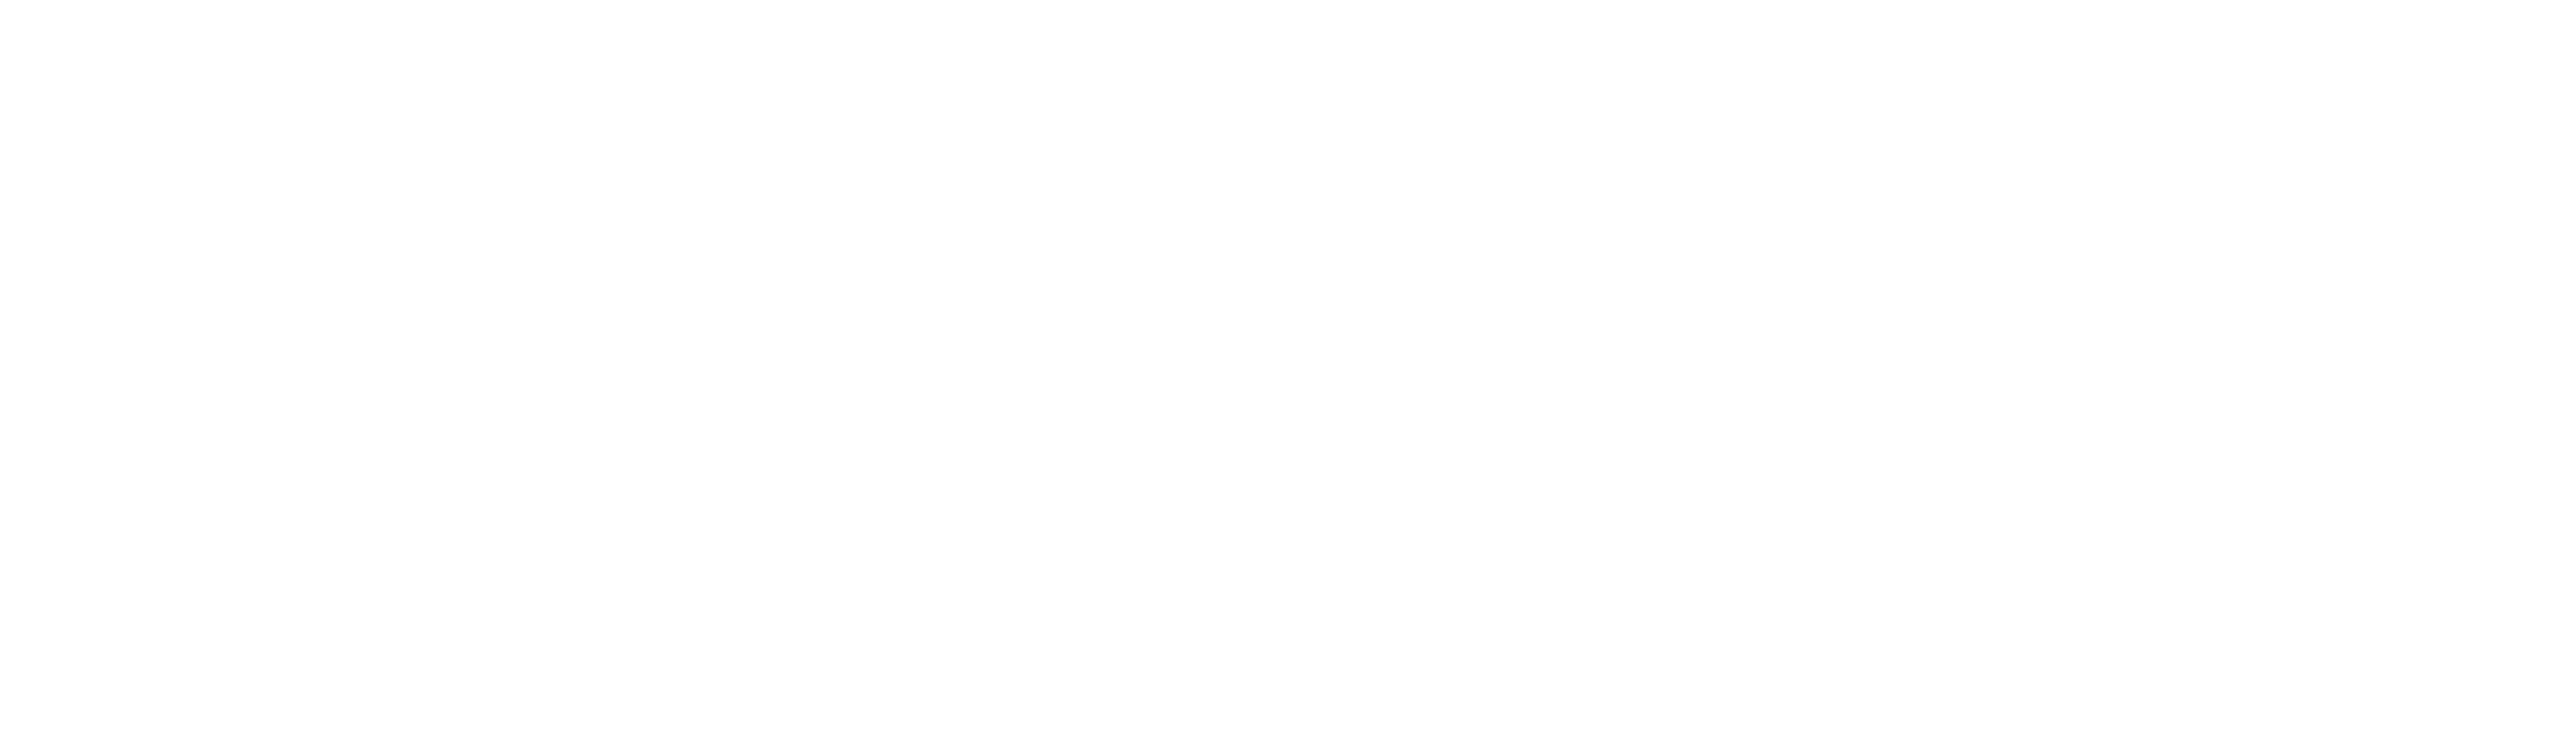 Splunk_logo white copy